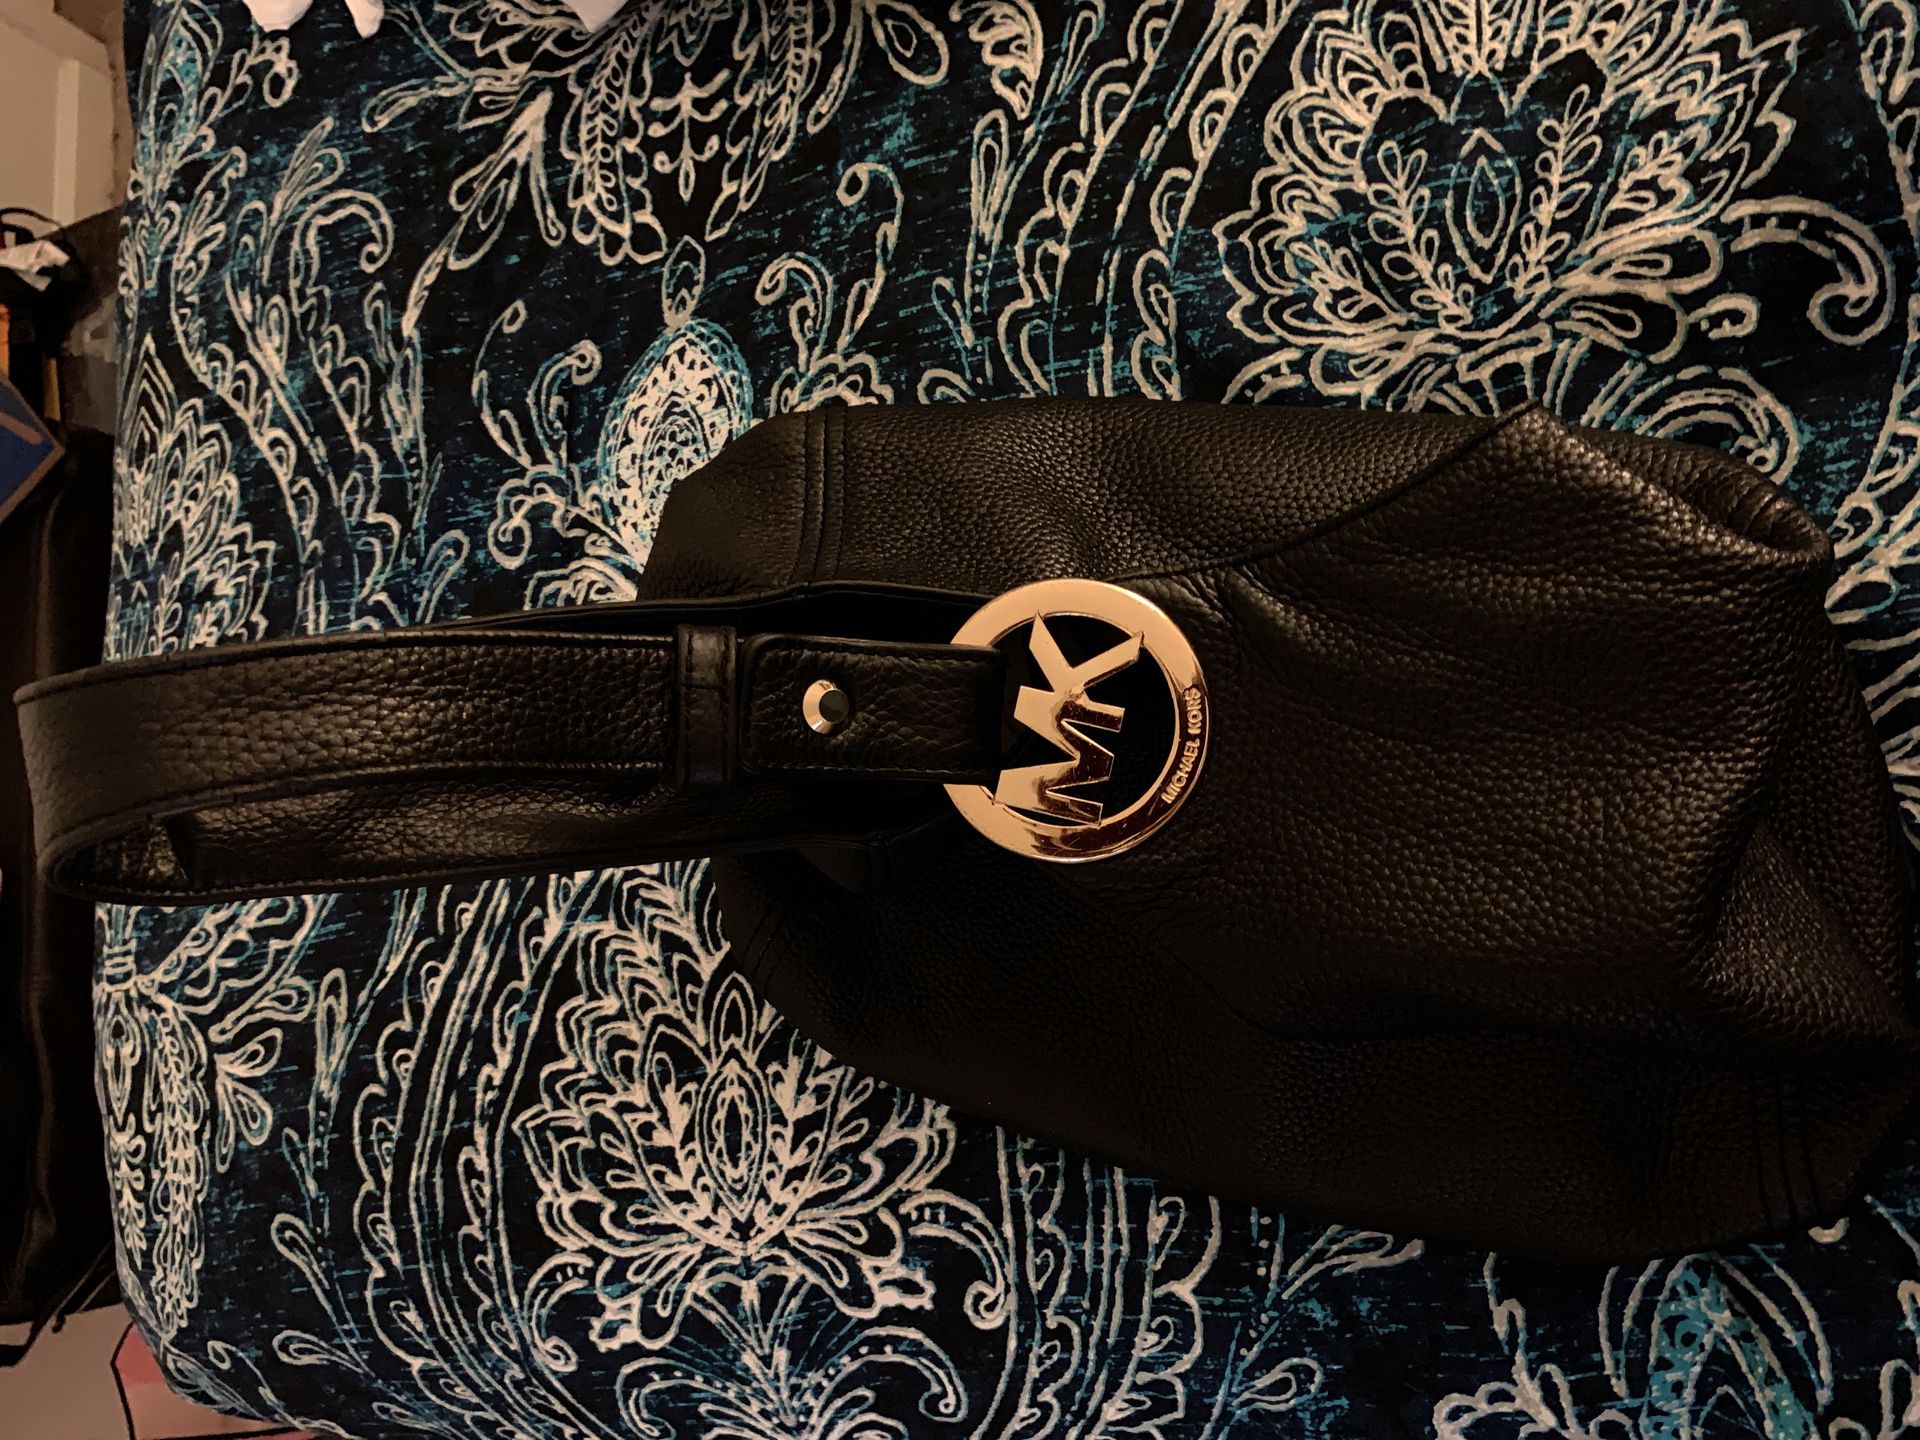 Michael Kors Authentic black hobo bag